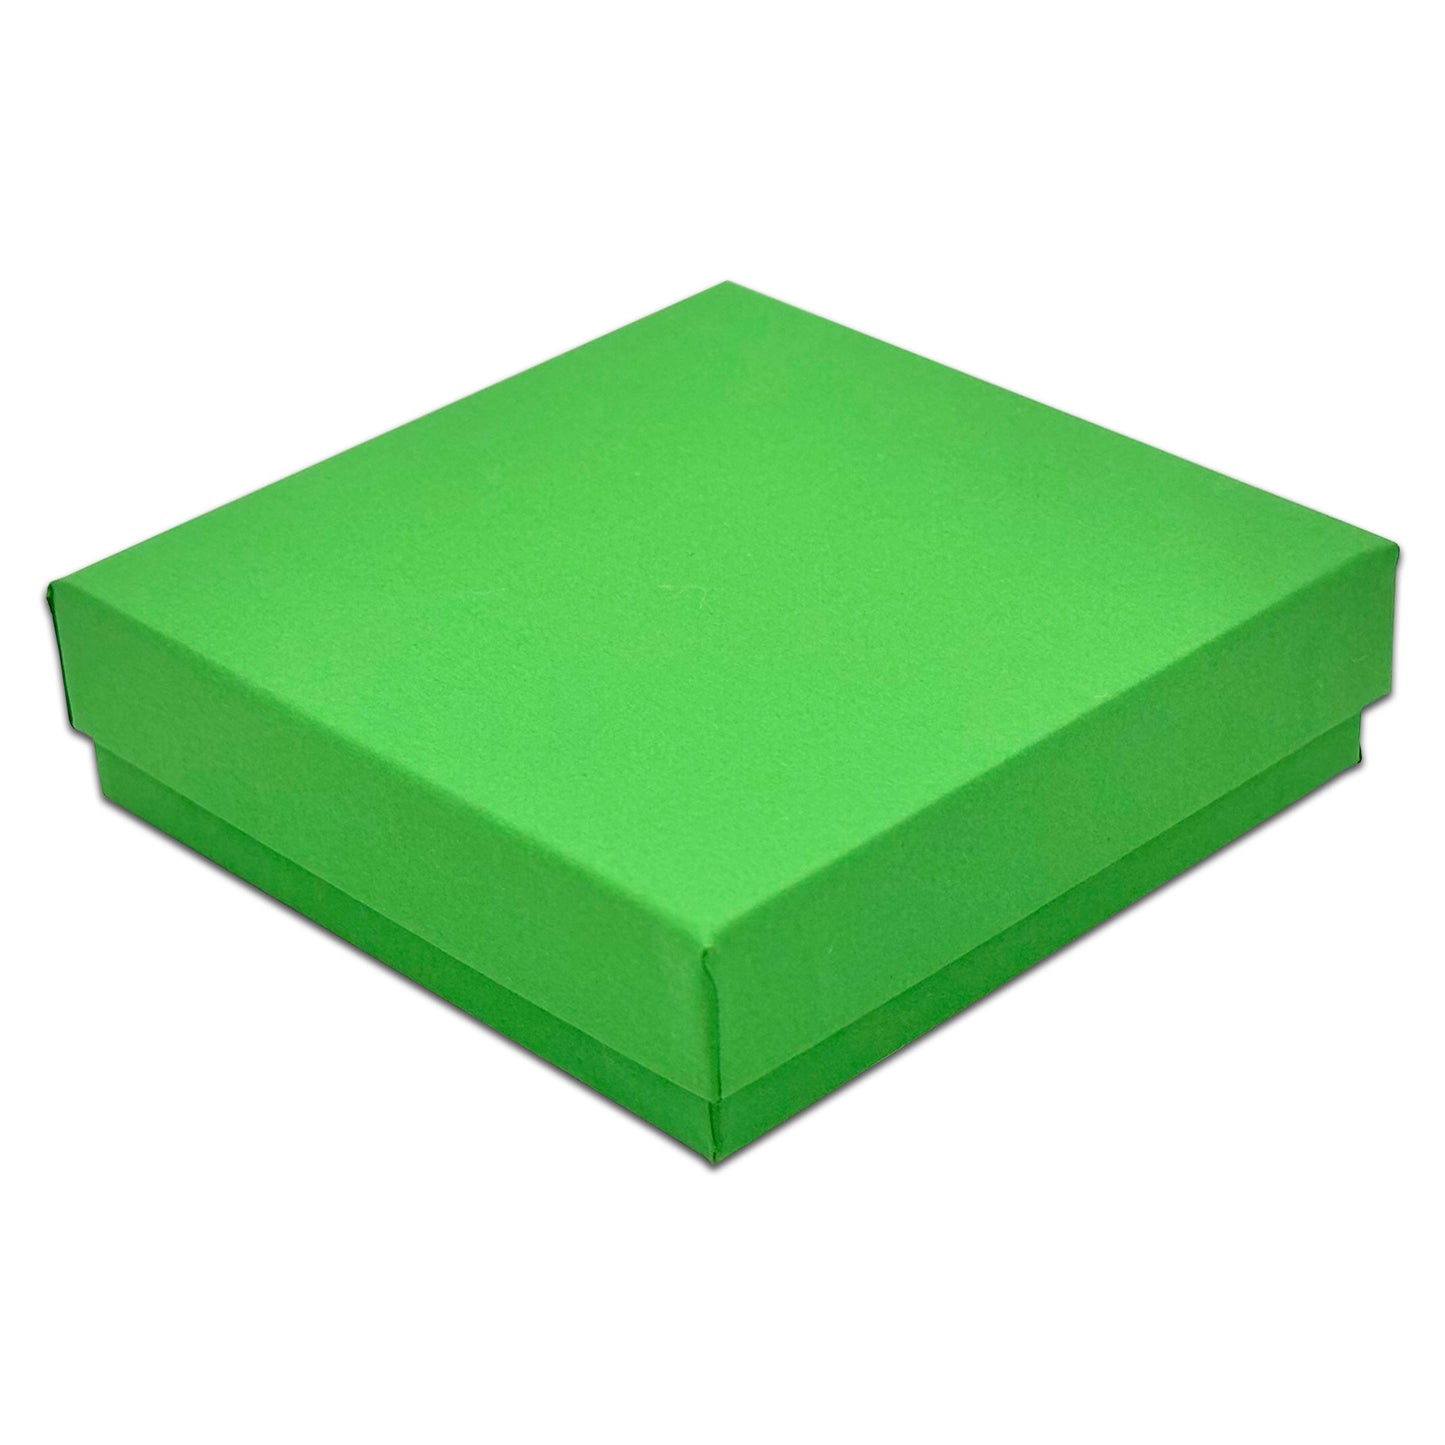 3 1/2" x 3 1/2" x 1" Light Green Cotton Filled Paper Box